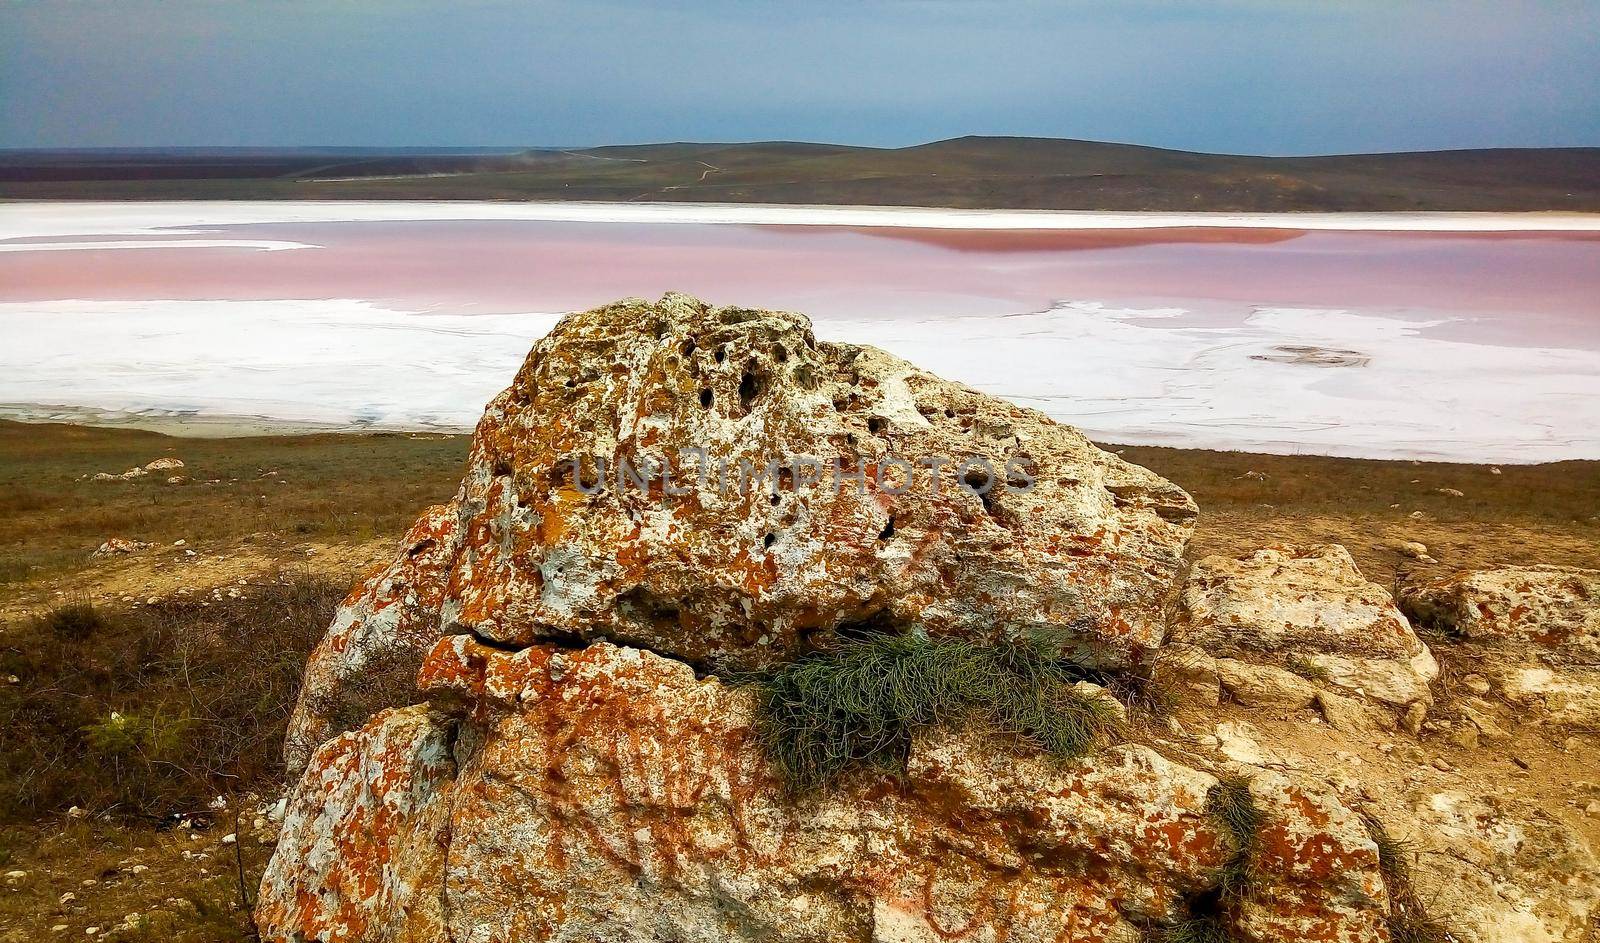 Pink salt lake. Salt industry - extraction of pink salt. Wonder of nature. The pink crust of salt on water.